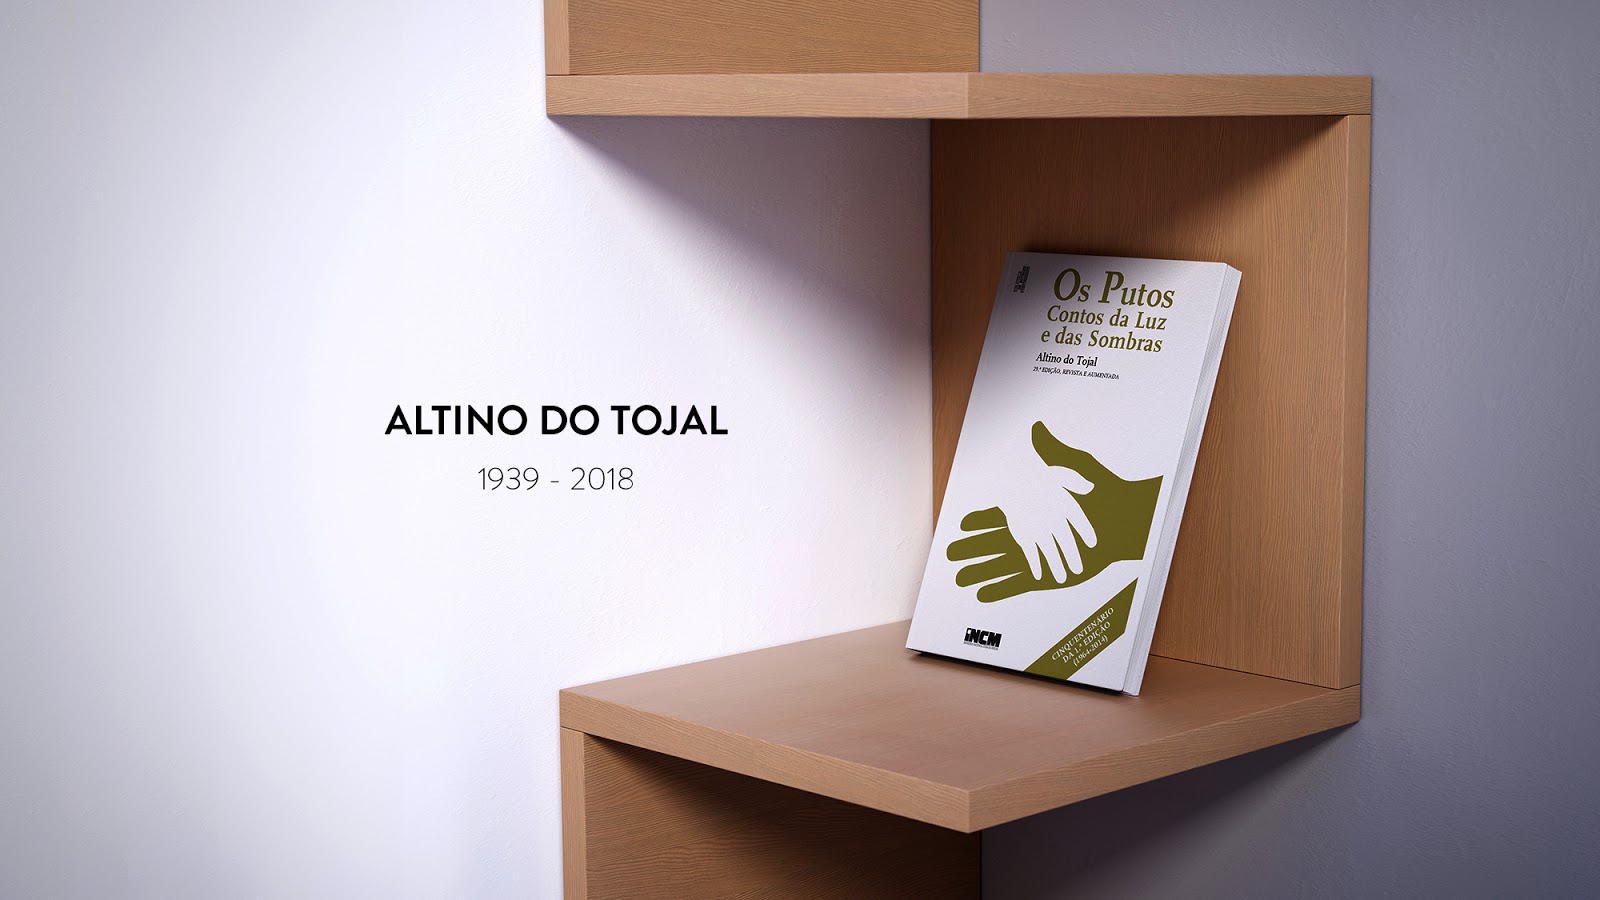 In memoriam Altino do Tojal (1939-2018)